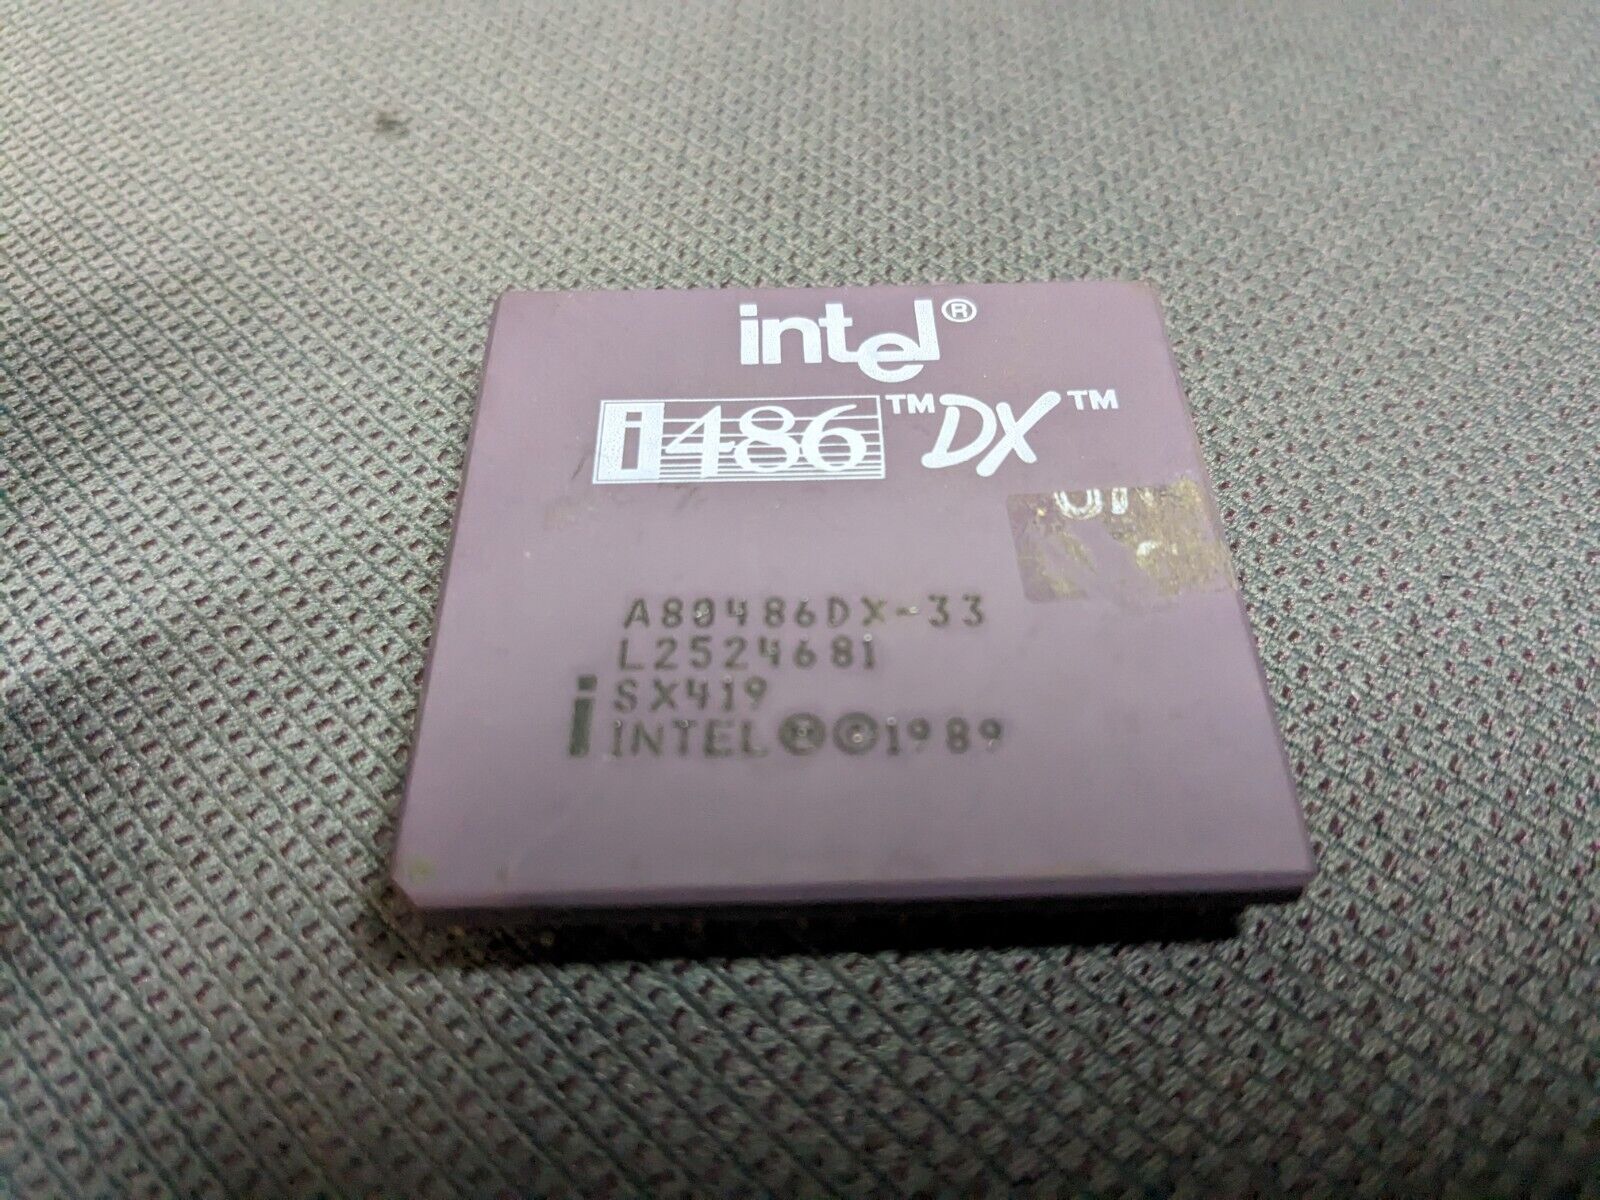 Vintage Intel i486 DX 33 MHz A80486DX-33 SX419 CPU